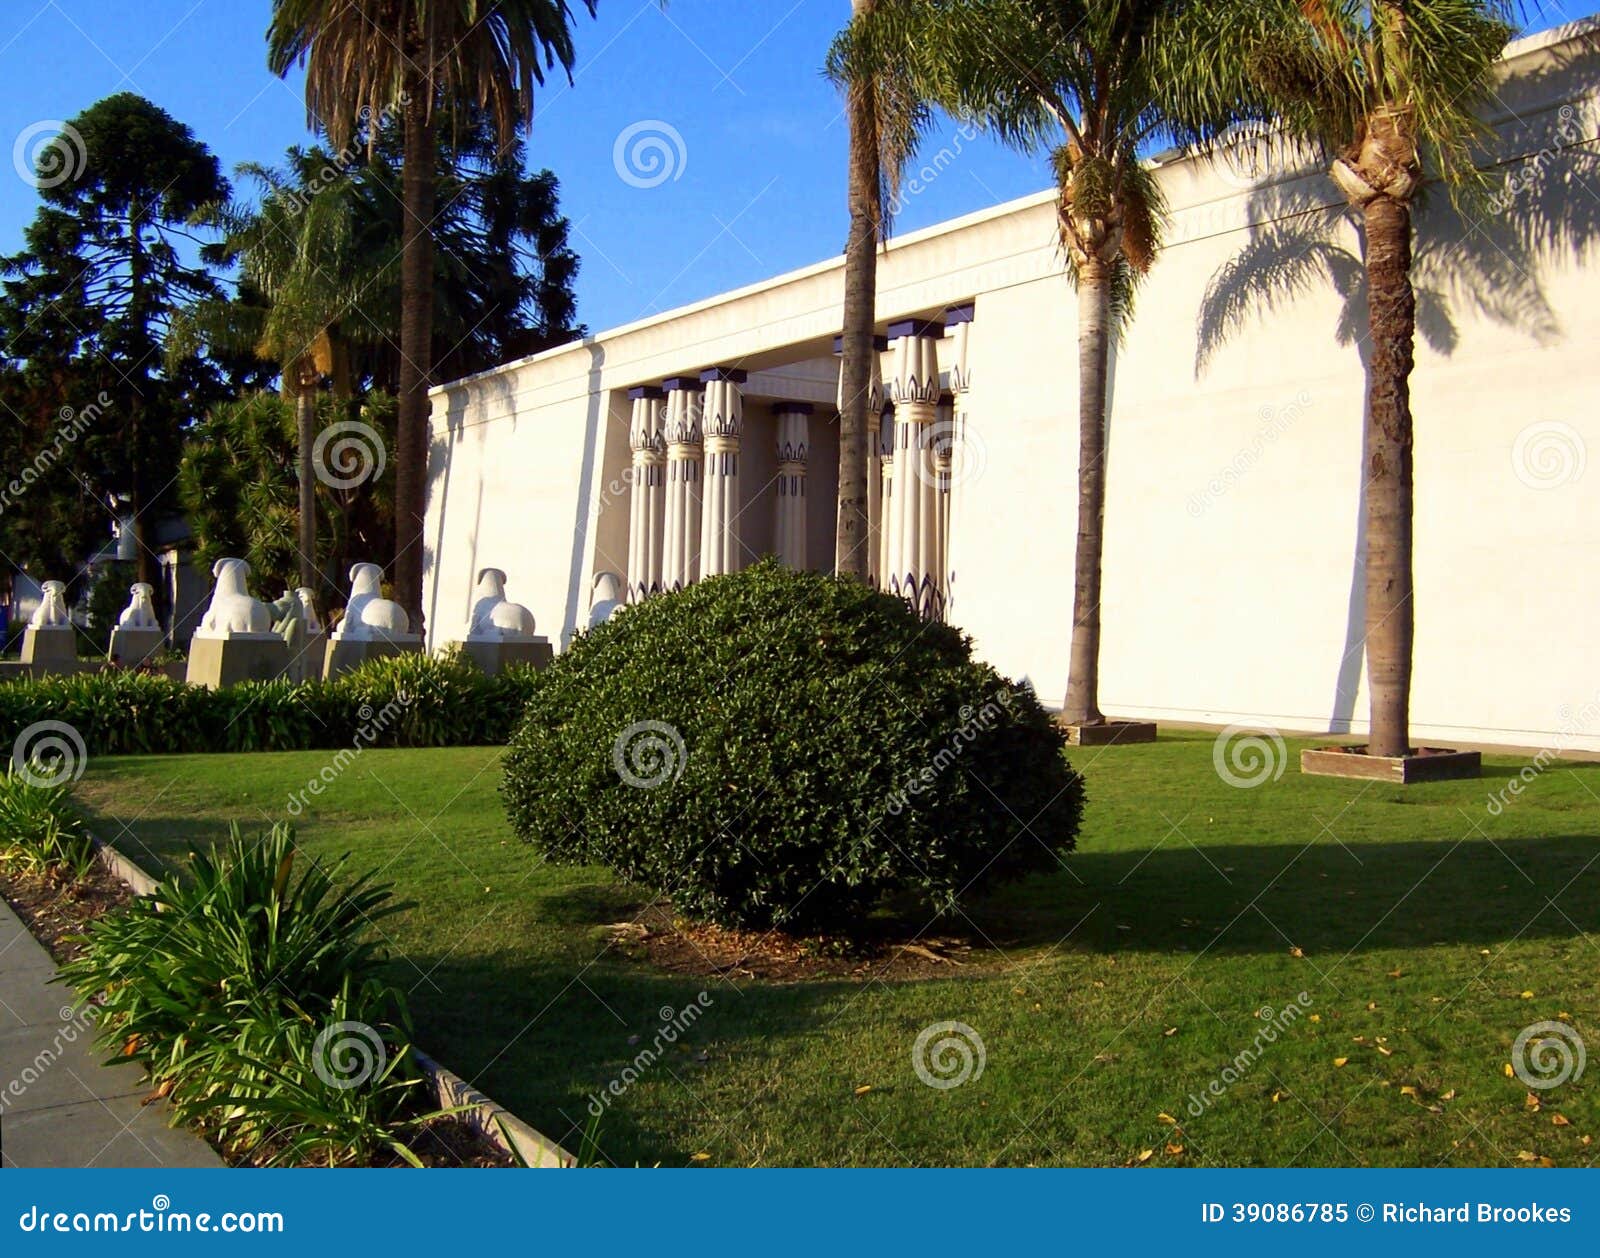 egyptian museum, san jose, california